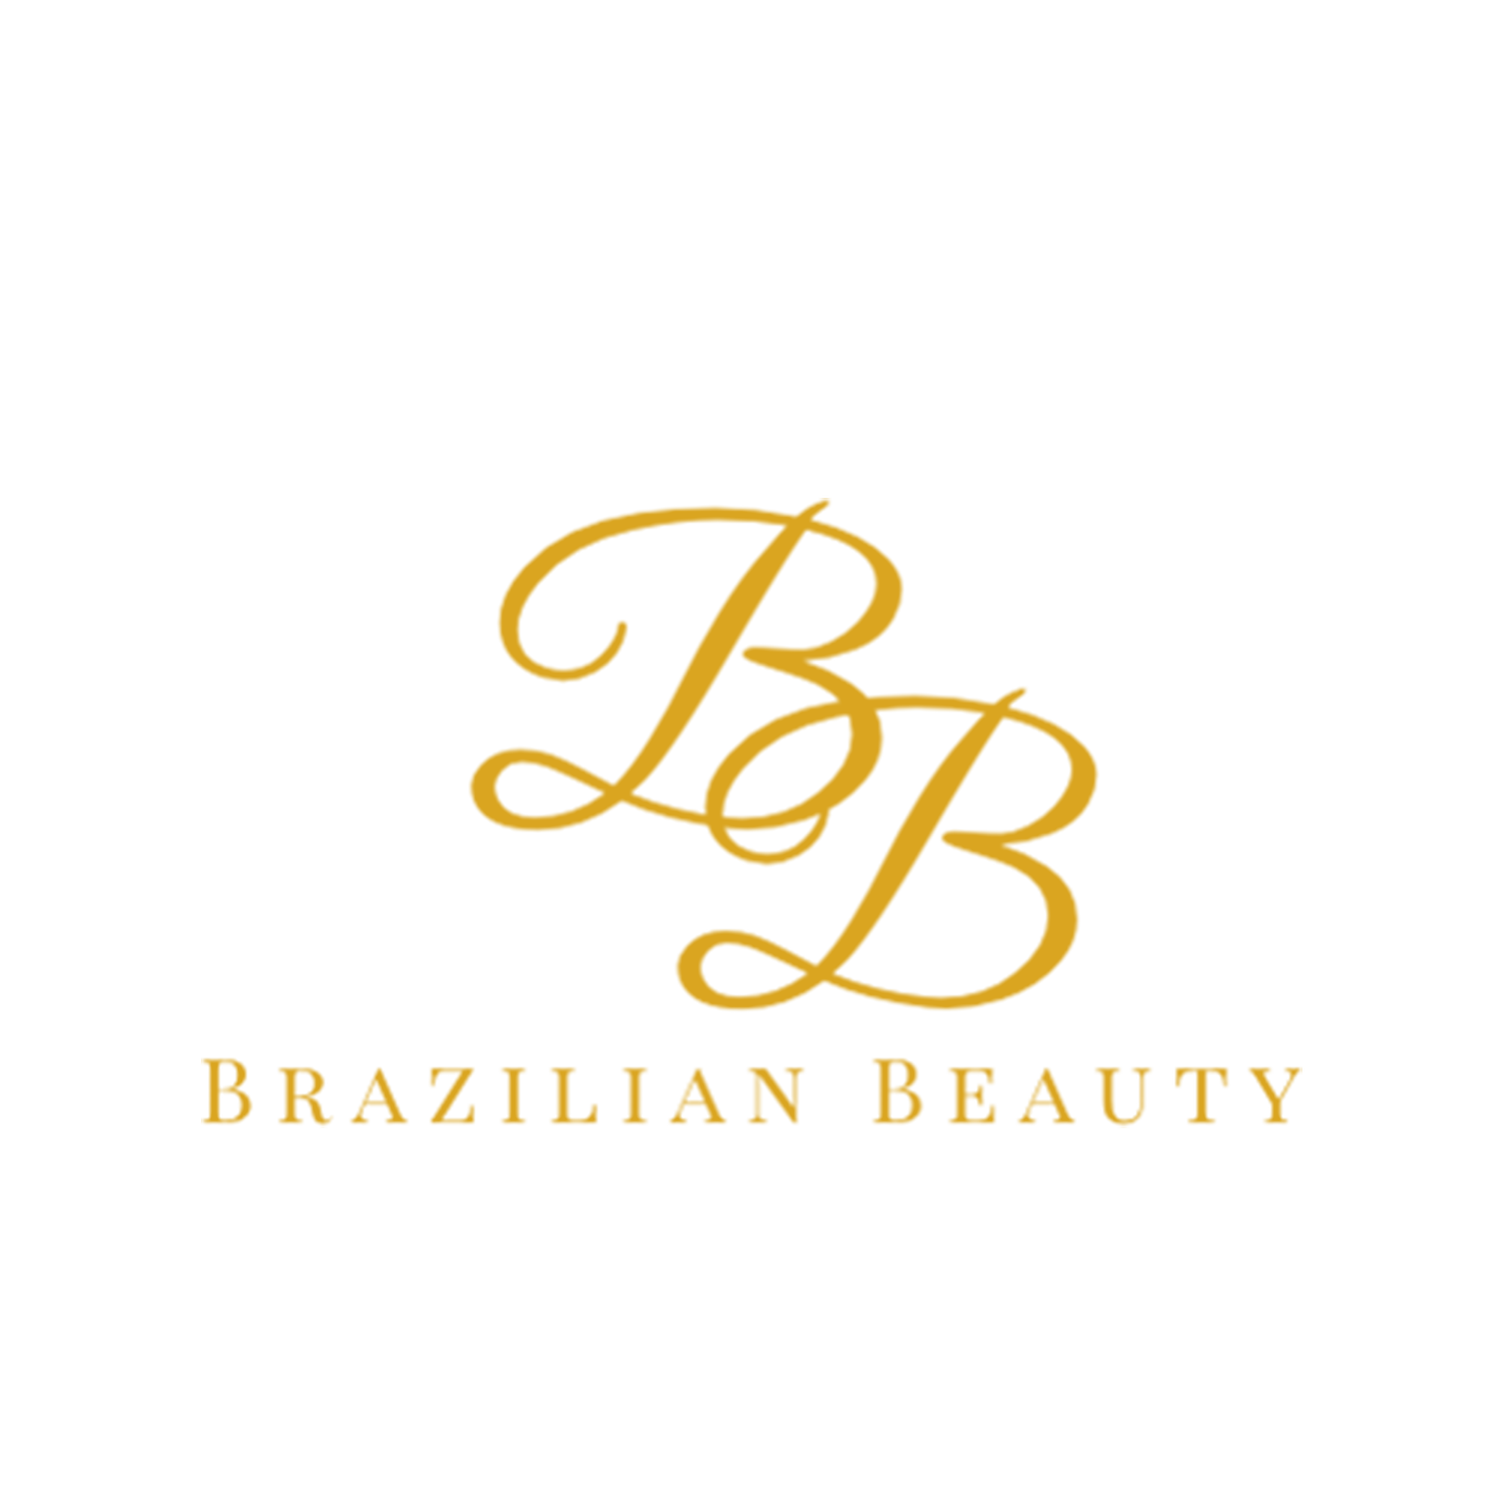 Brazilian Beauty by Camilla